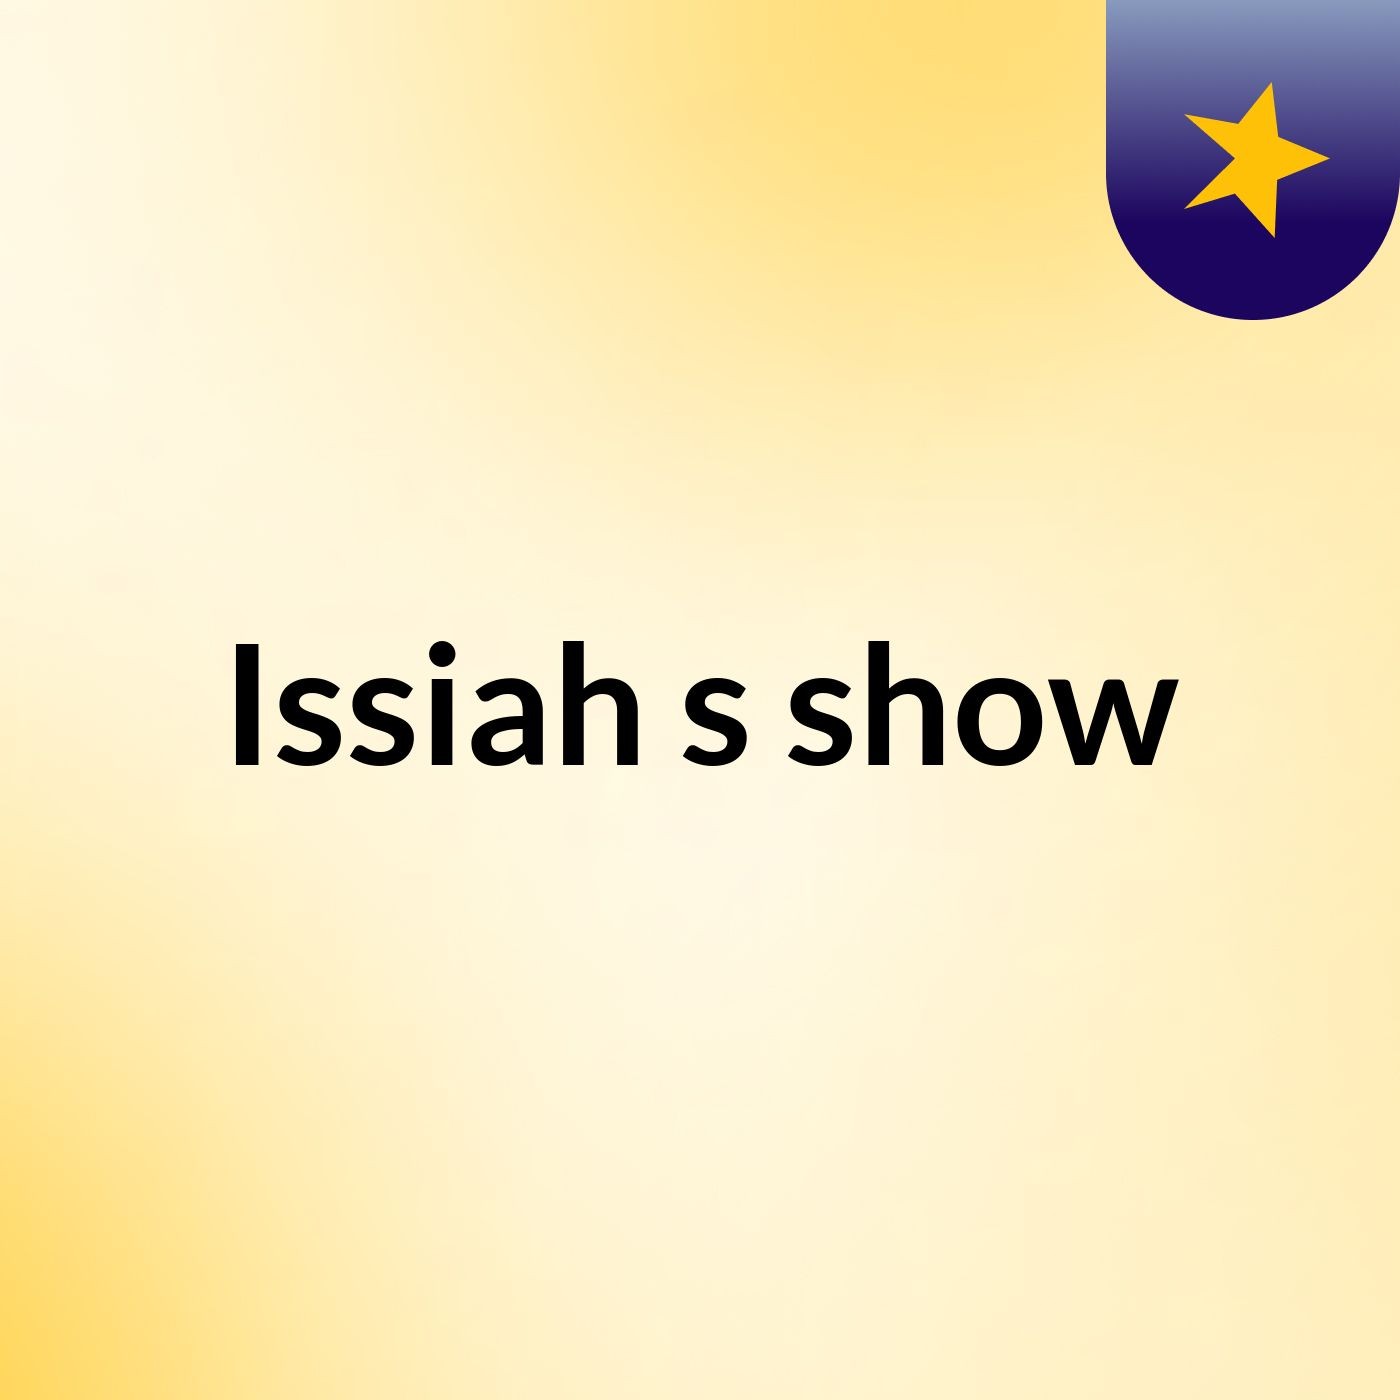 Issiah's show